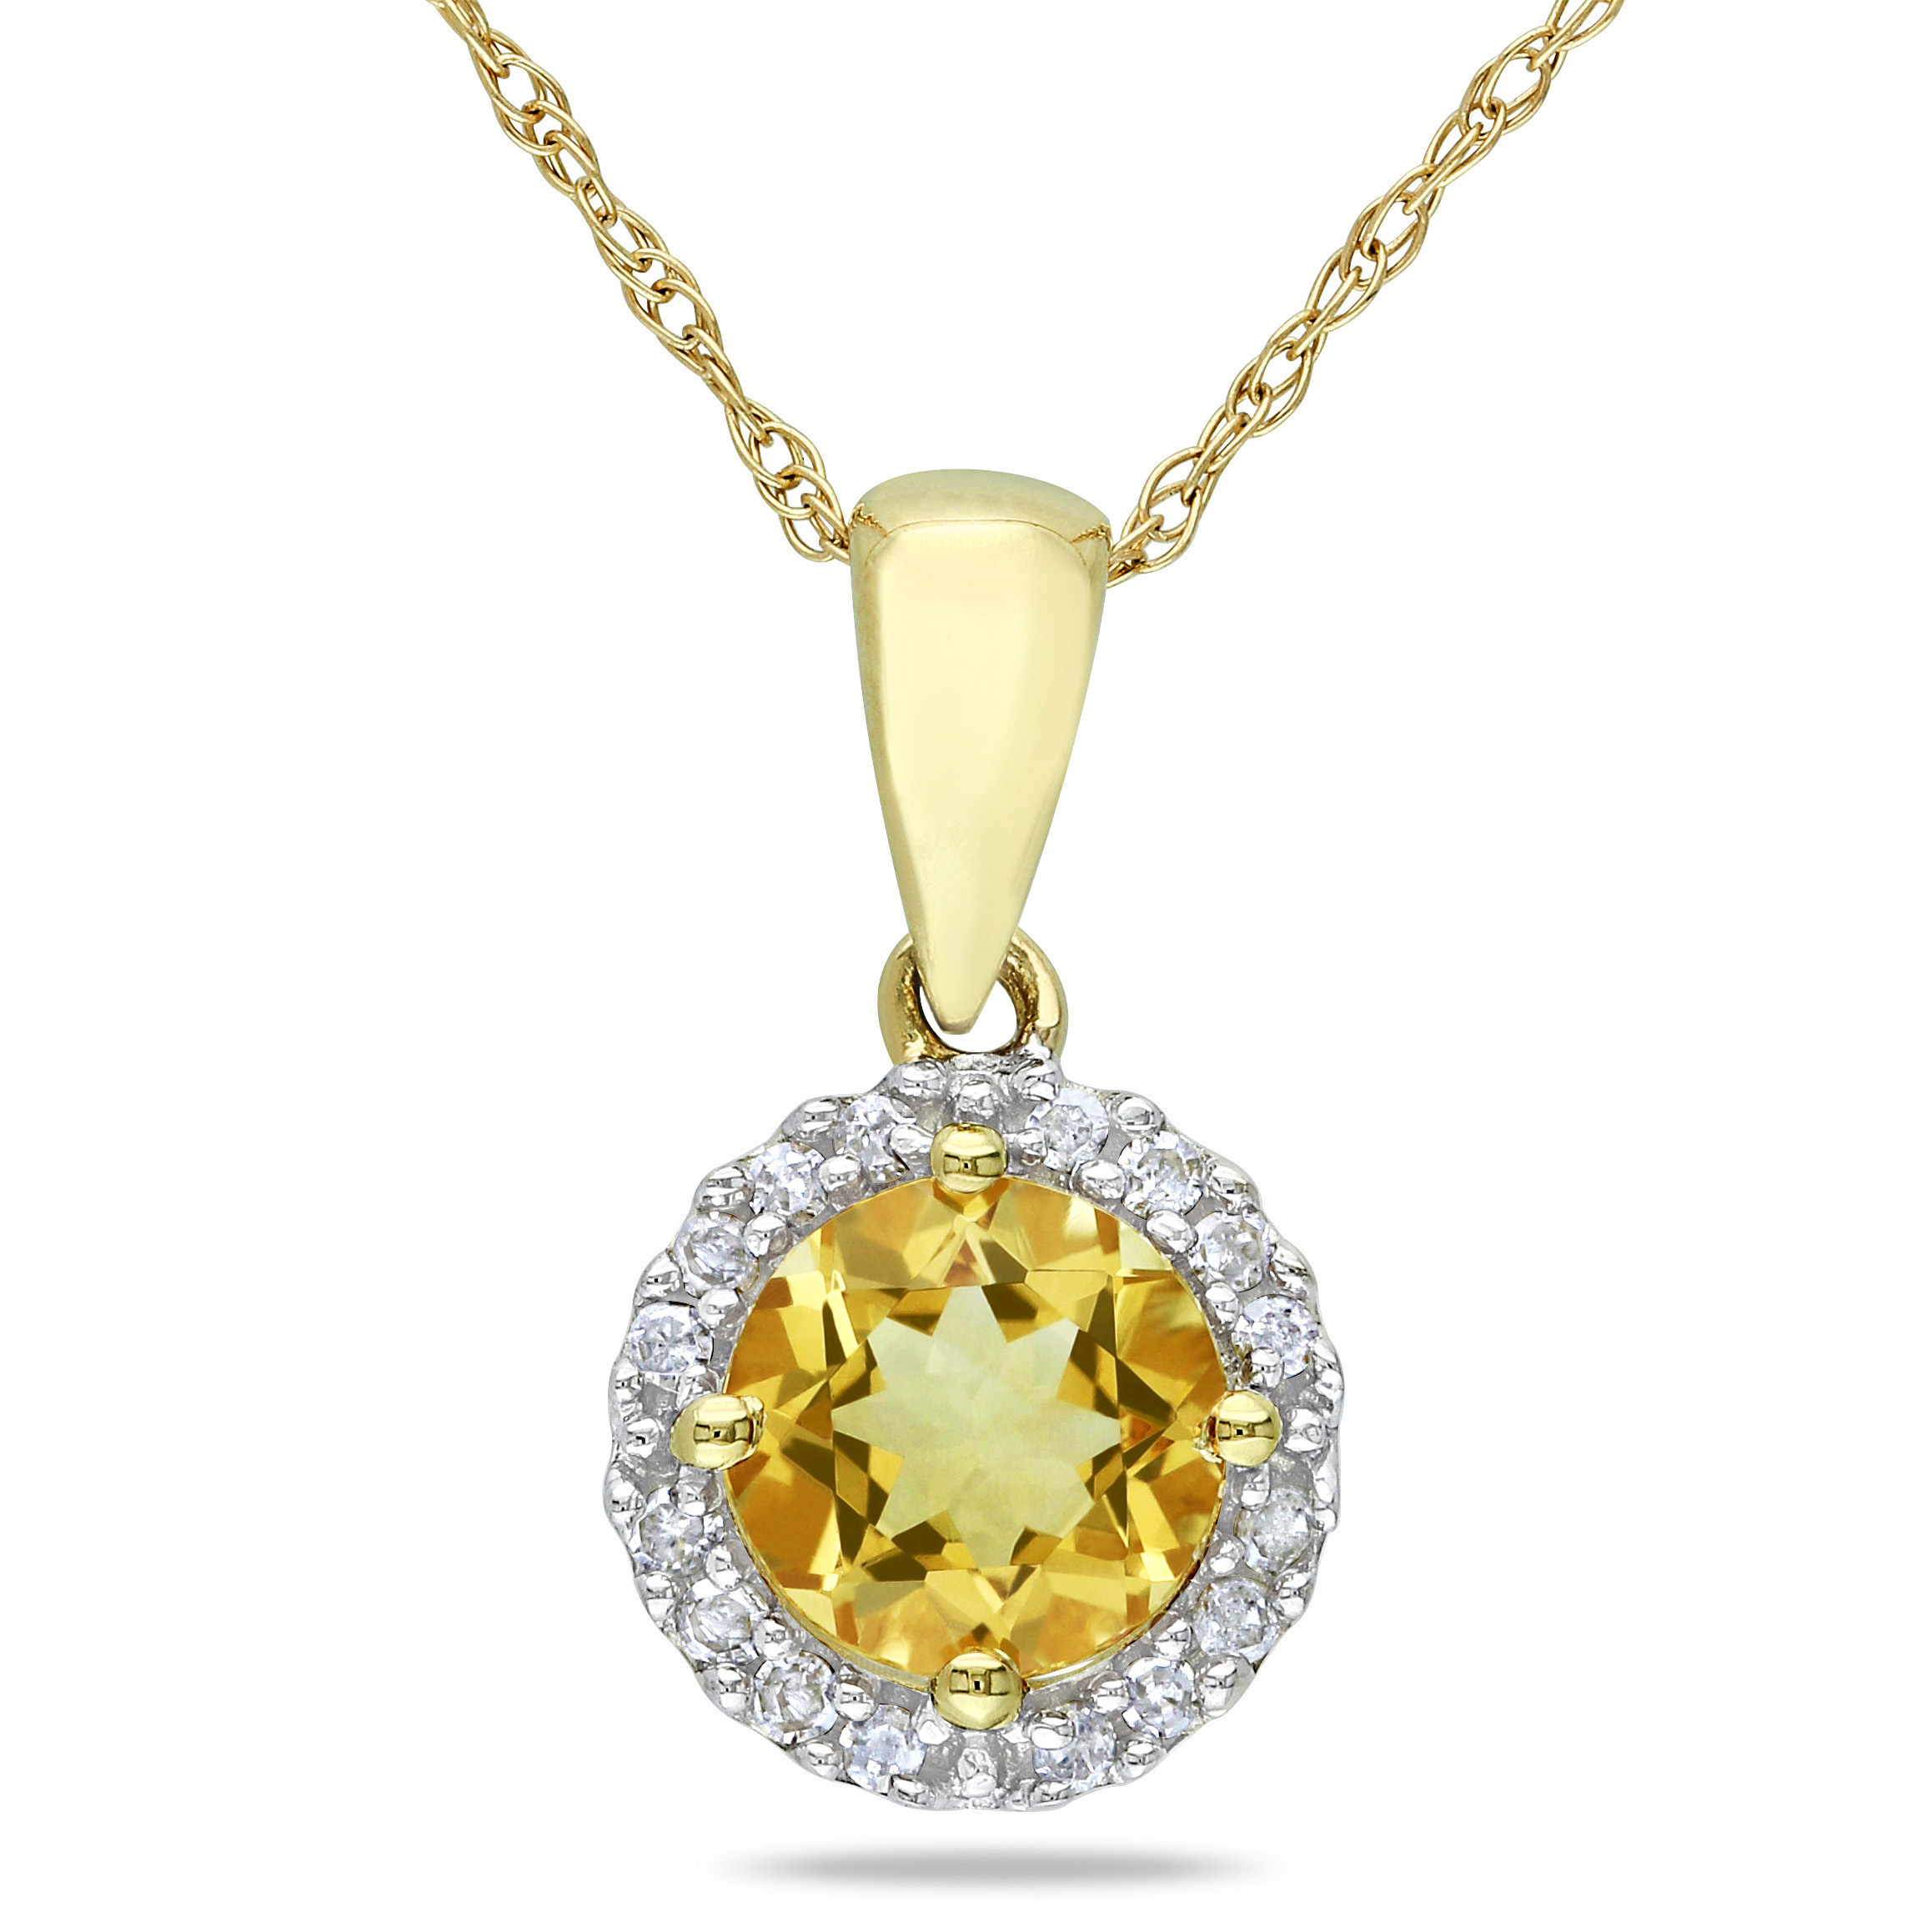 1/10 Carat T.W. Diamond 10k White Gold Halo Pendant Necklace